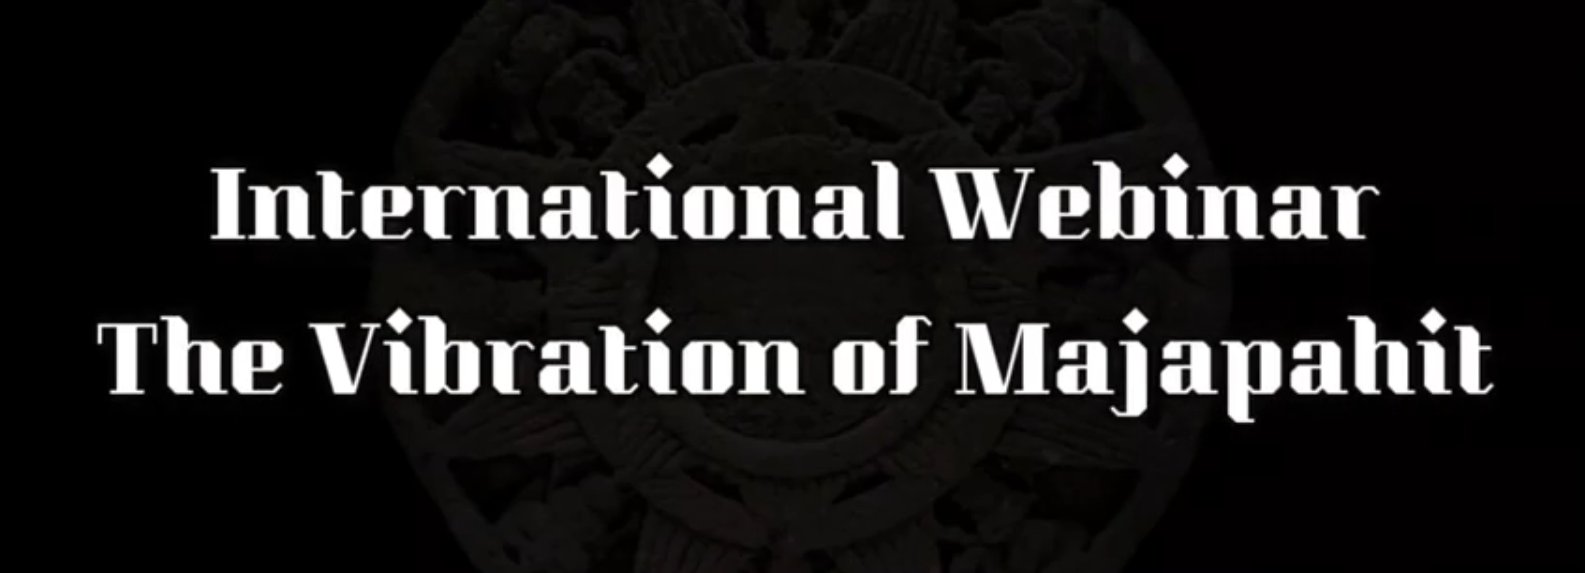 International Webinar “The Vibration of Majapahit” | Evening Session